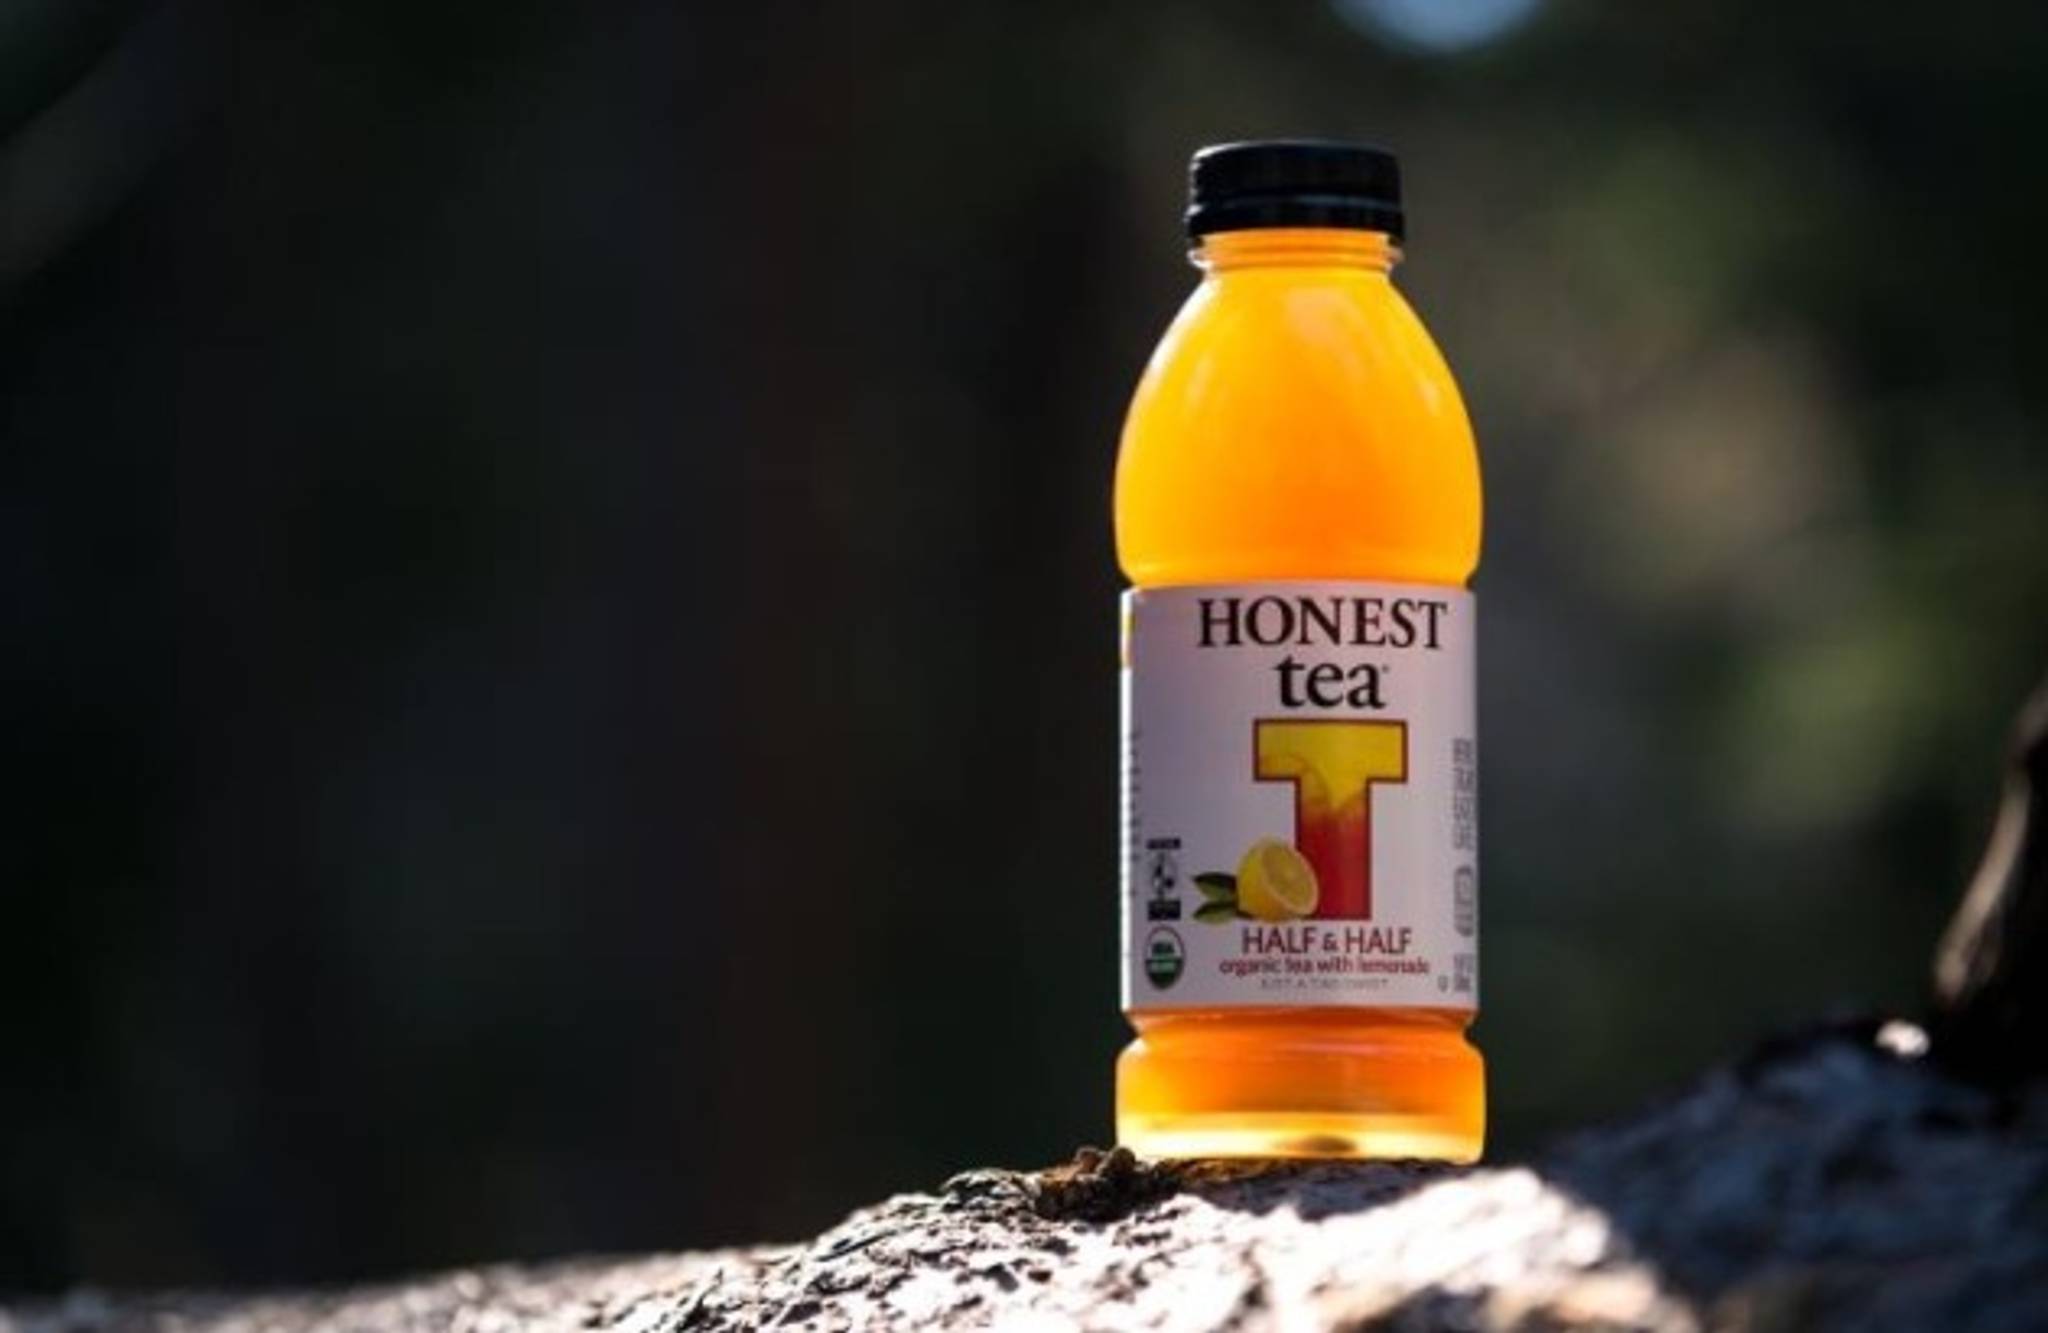 Honest Tea: communicating quality and provenance